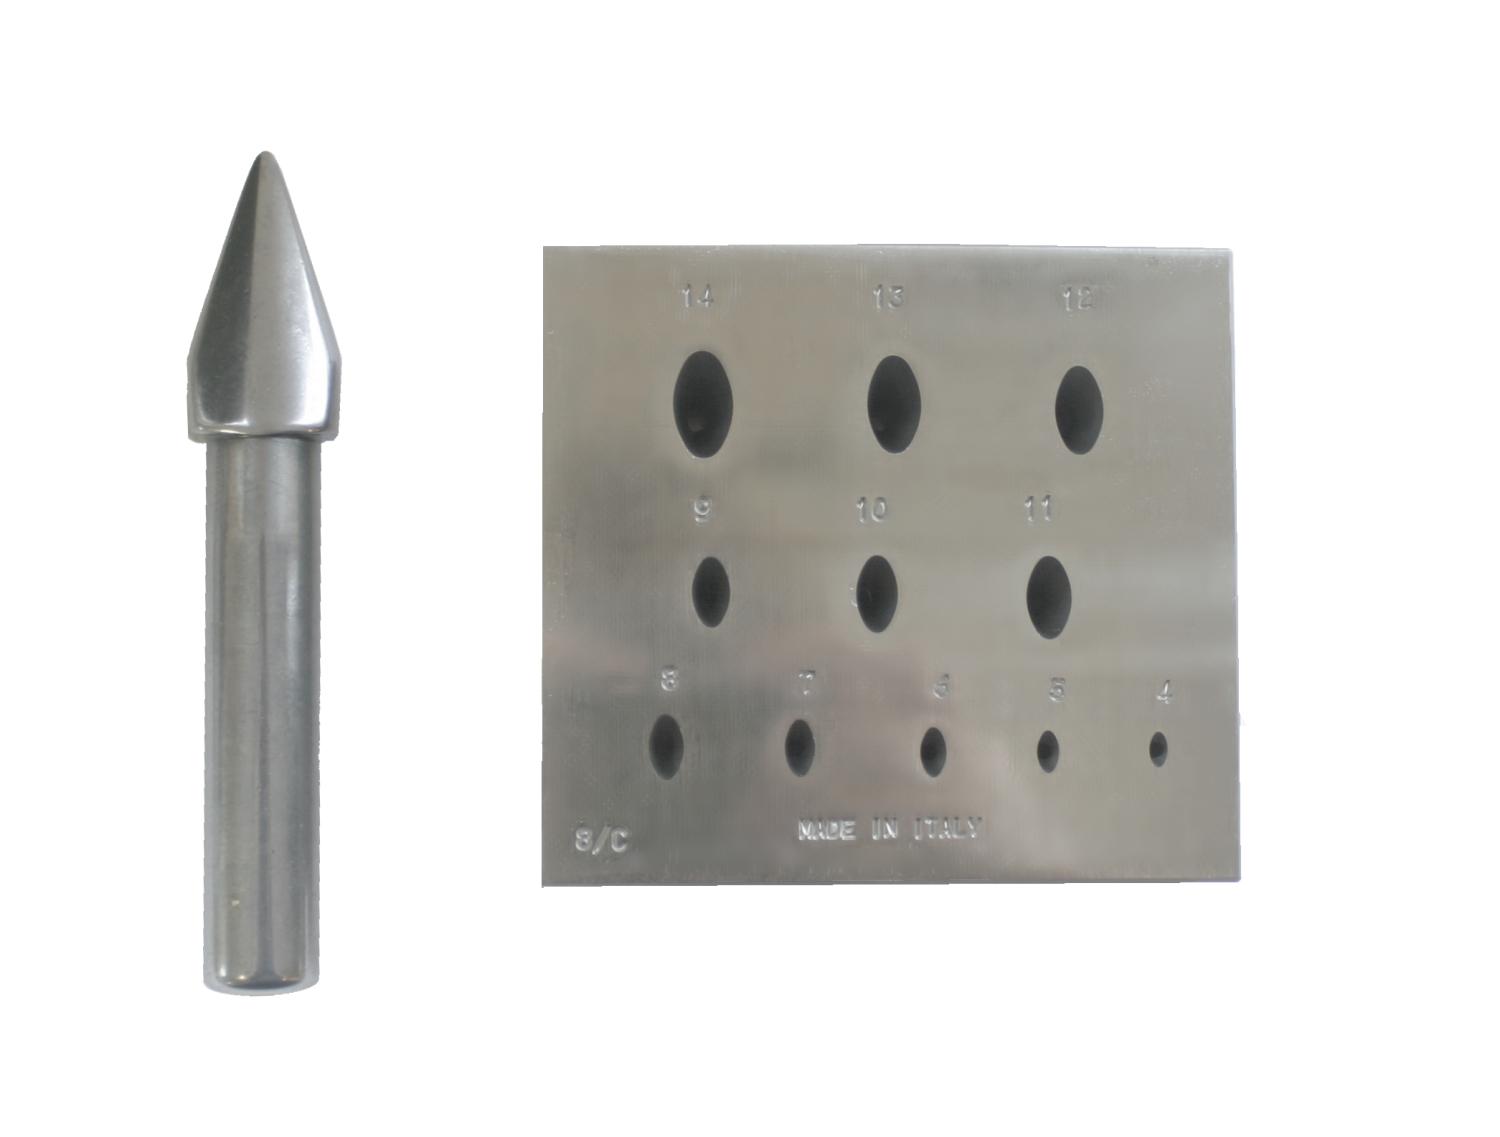 Kastenijzer ovaal-smal  4 - 14 mm 8/C